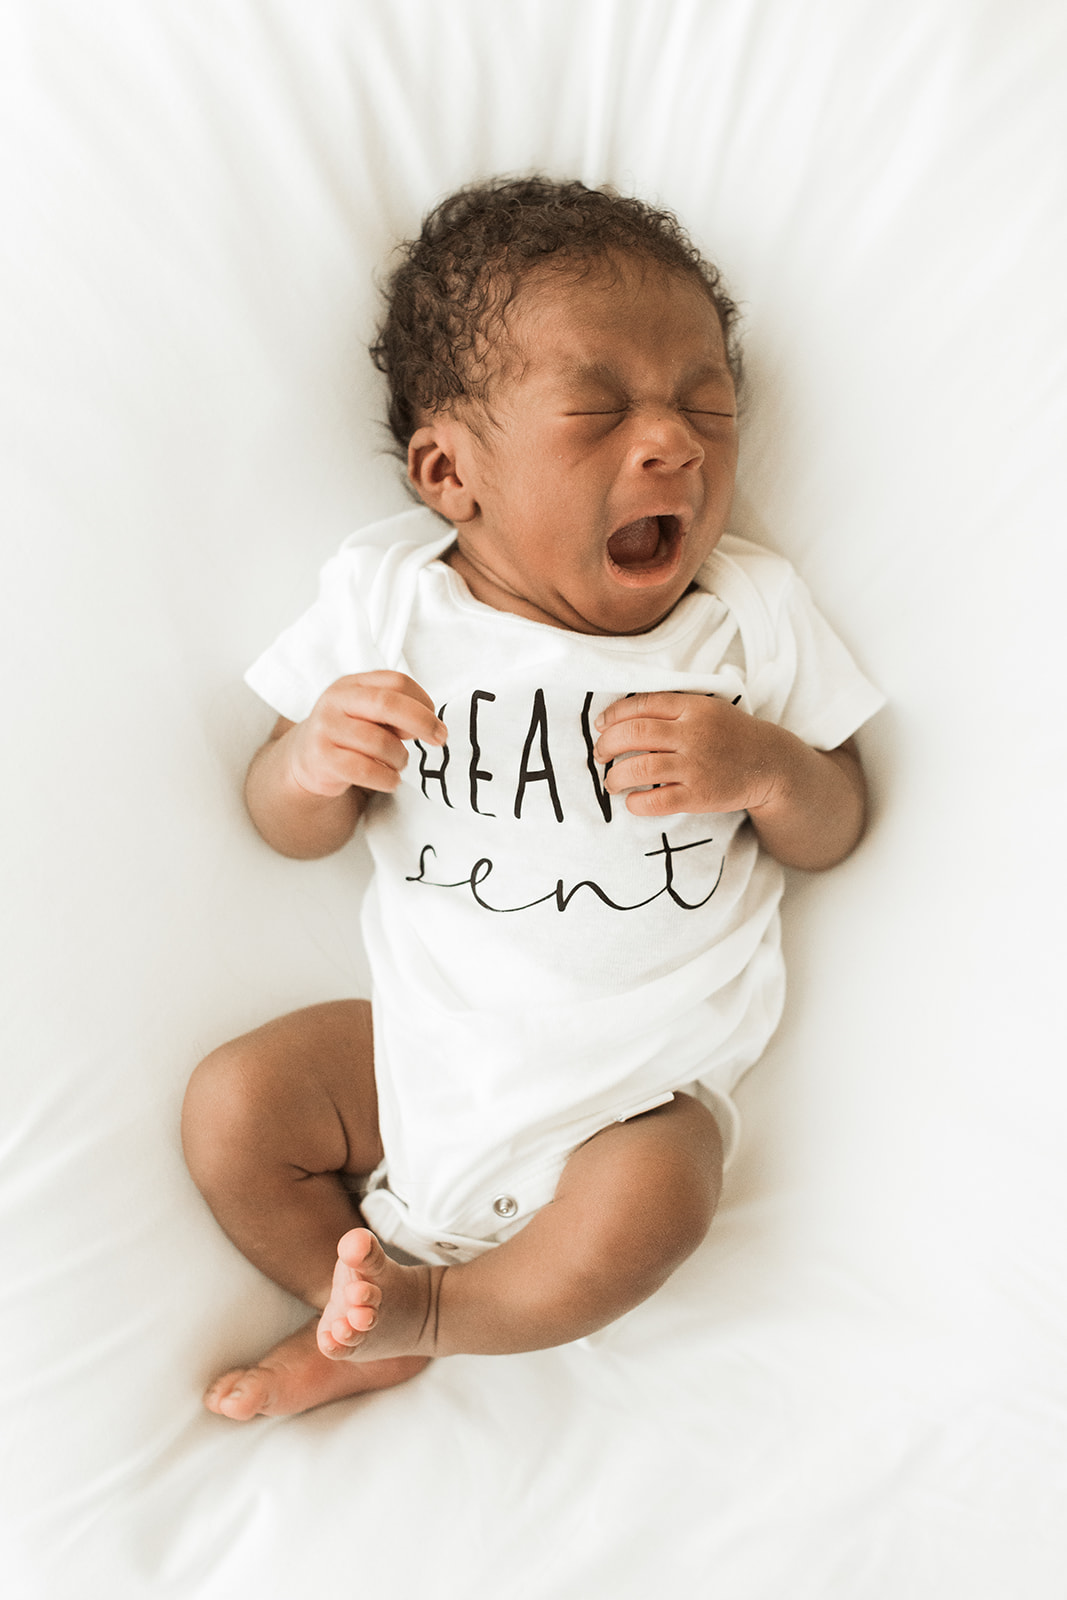 nashville newborn studio photo session. Yawning baby boy